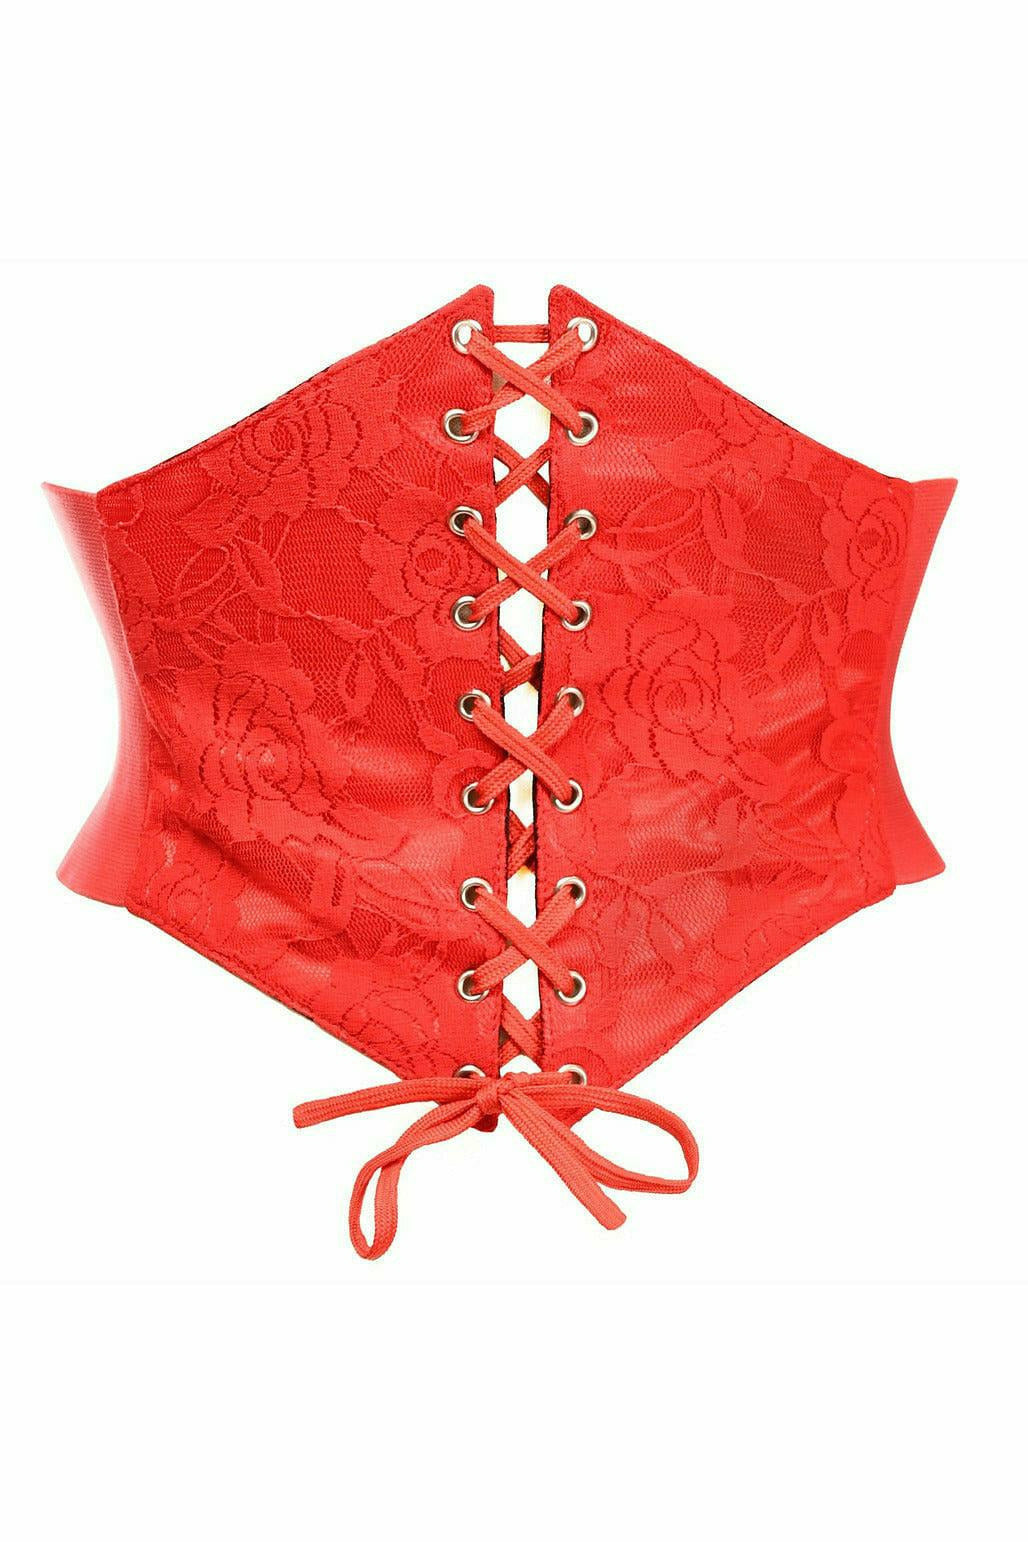 Lavish Red Lace Corset Belt Cincher - Daisy Corsets